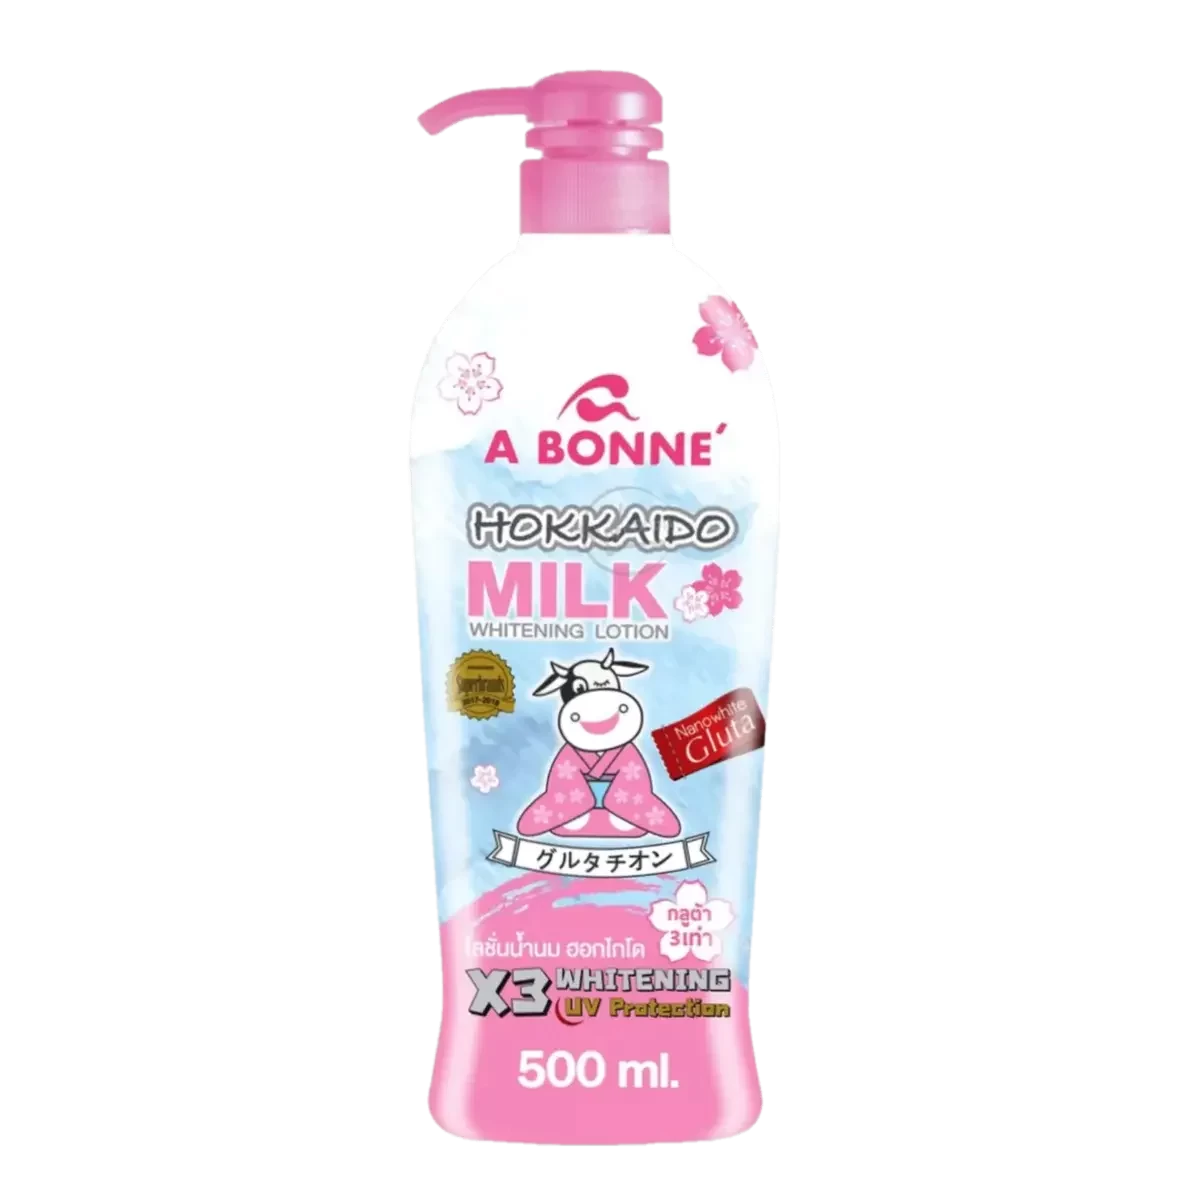 A Bonne Hokkaido Milk X3 Whitening Uv Protection Body Lotion Size 500Ml